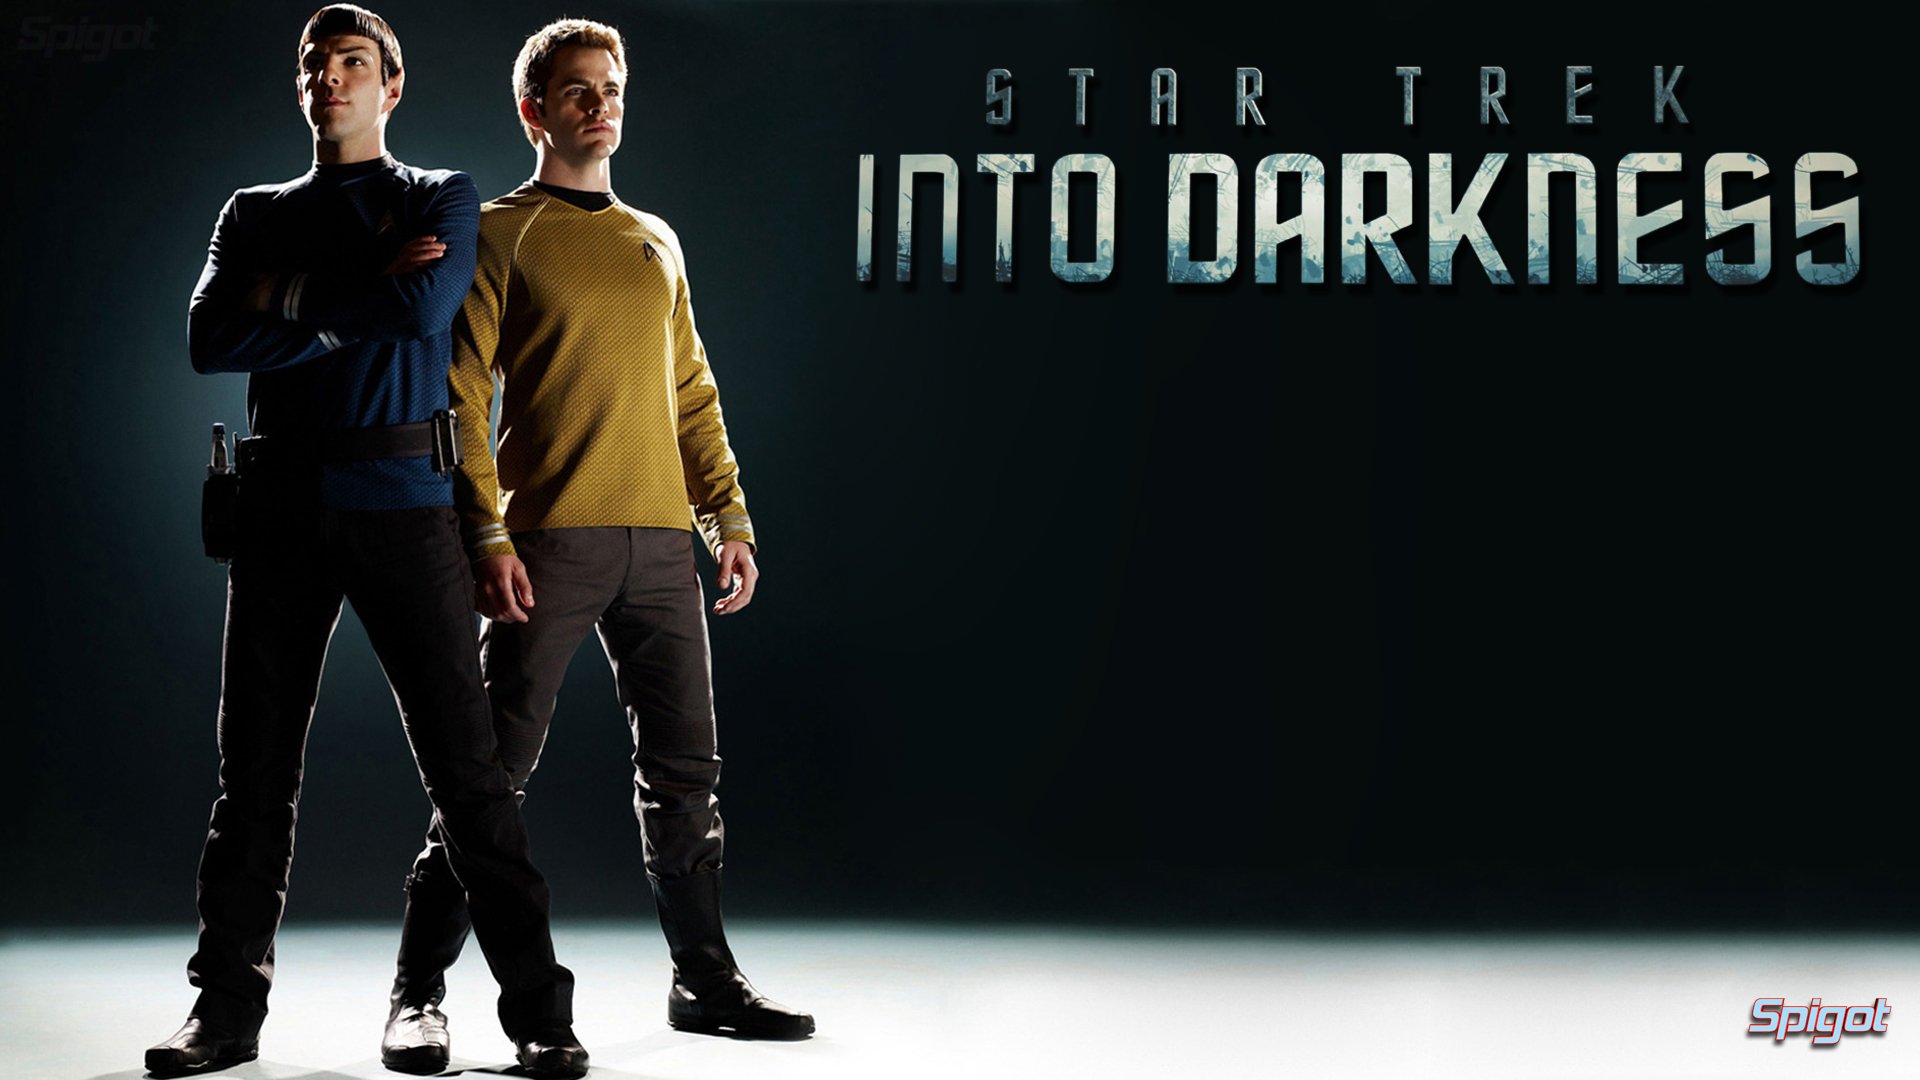 star trek into darkness download 480p